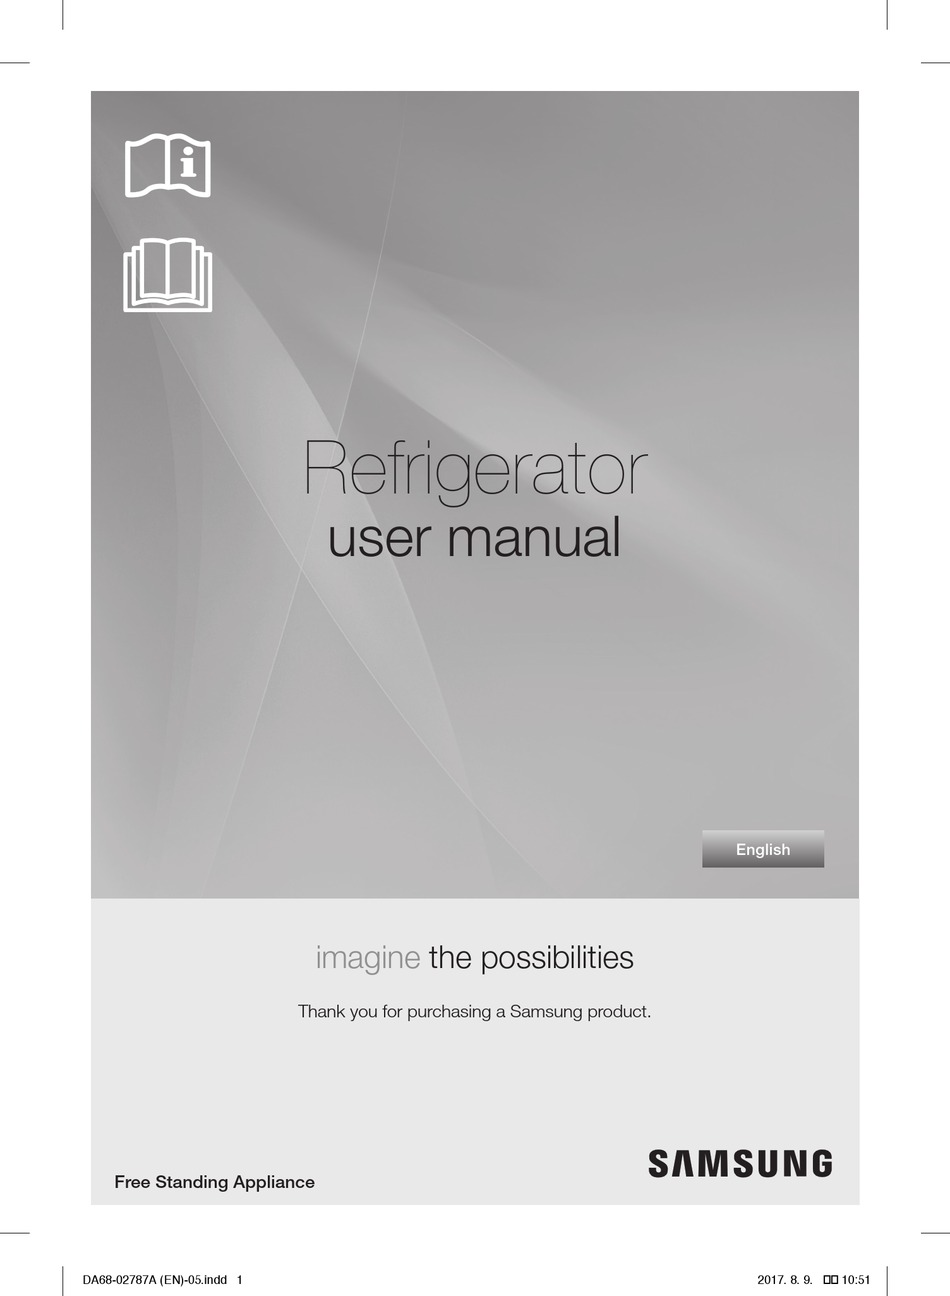 pyrosim user manual 2017